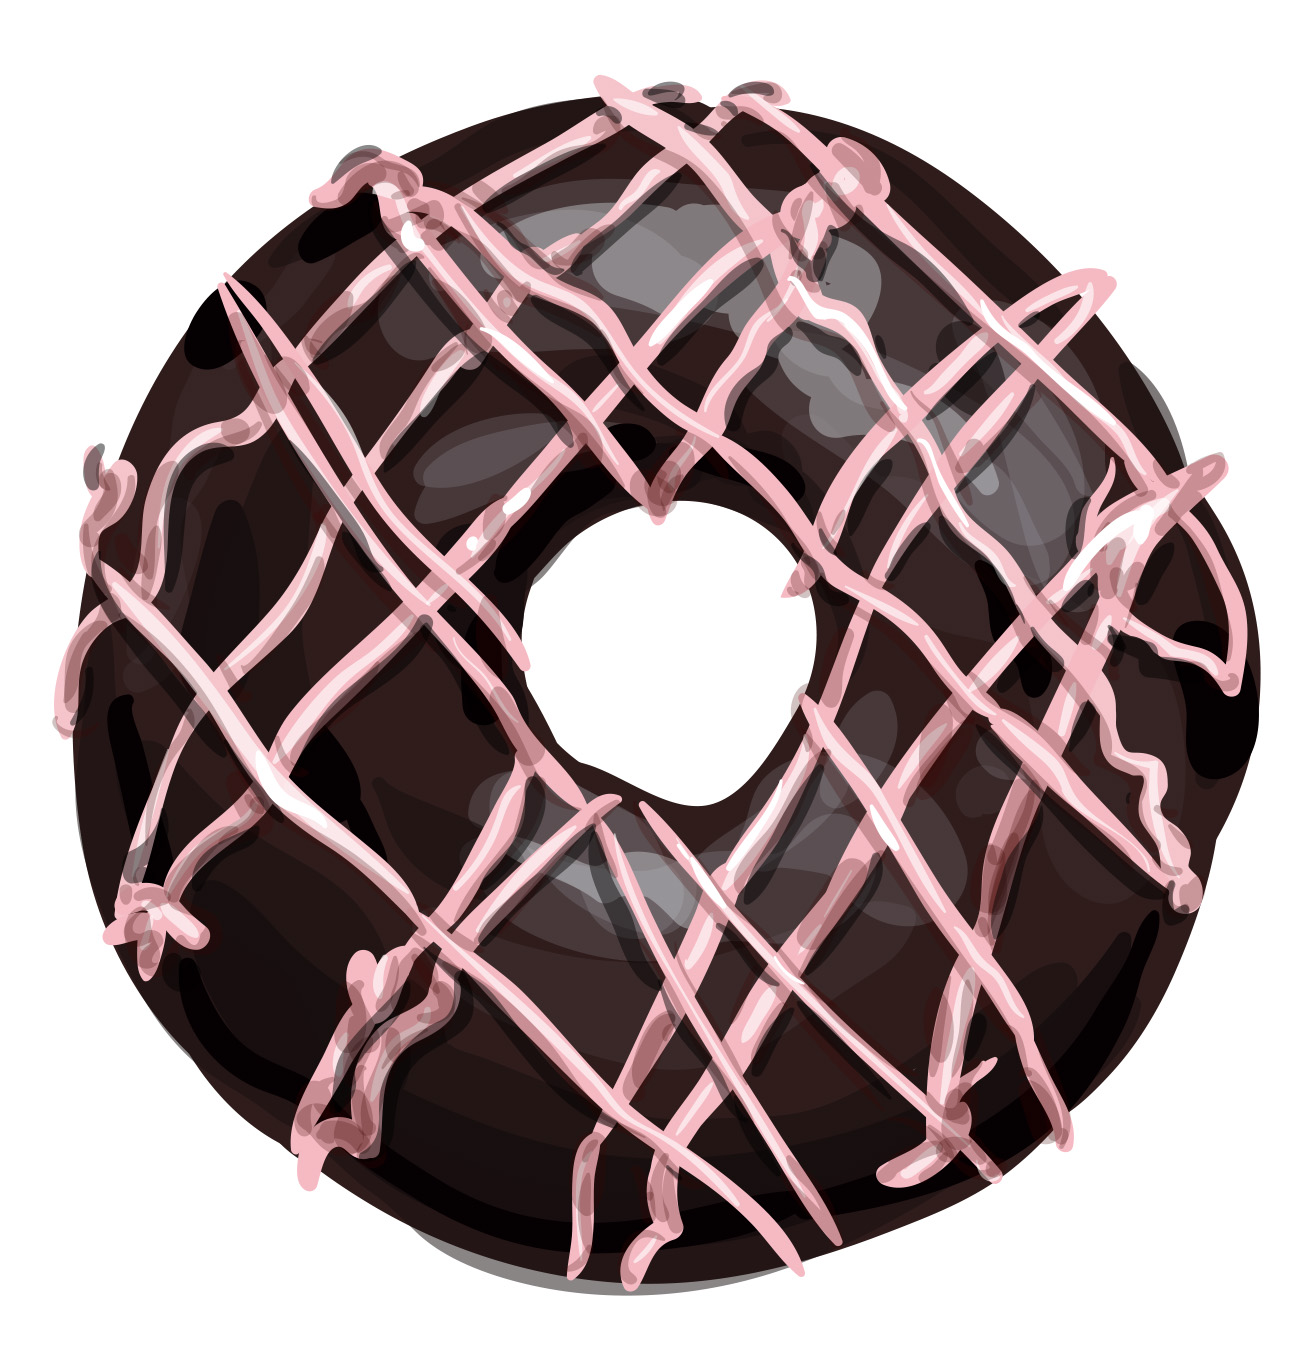 donut studio image